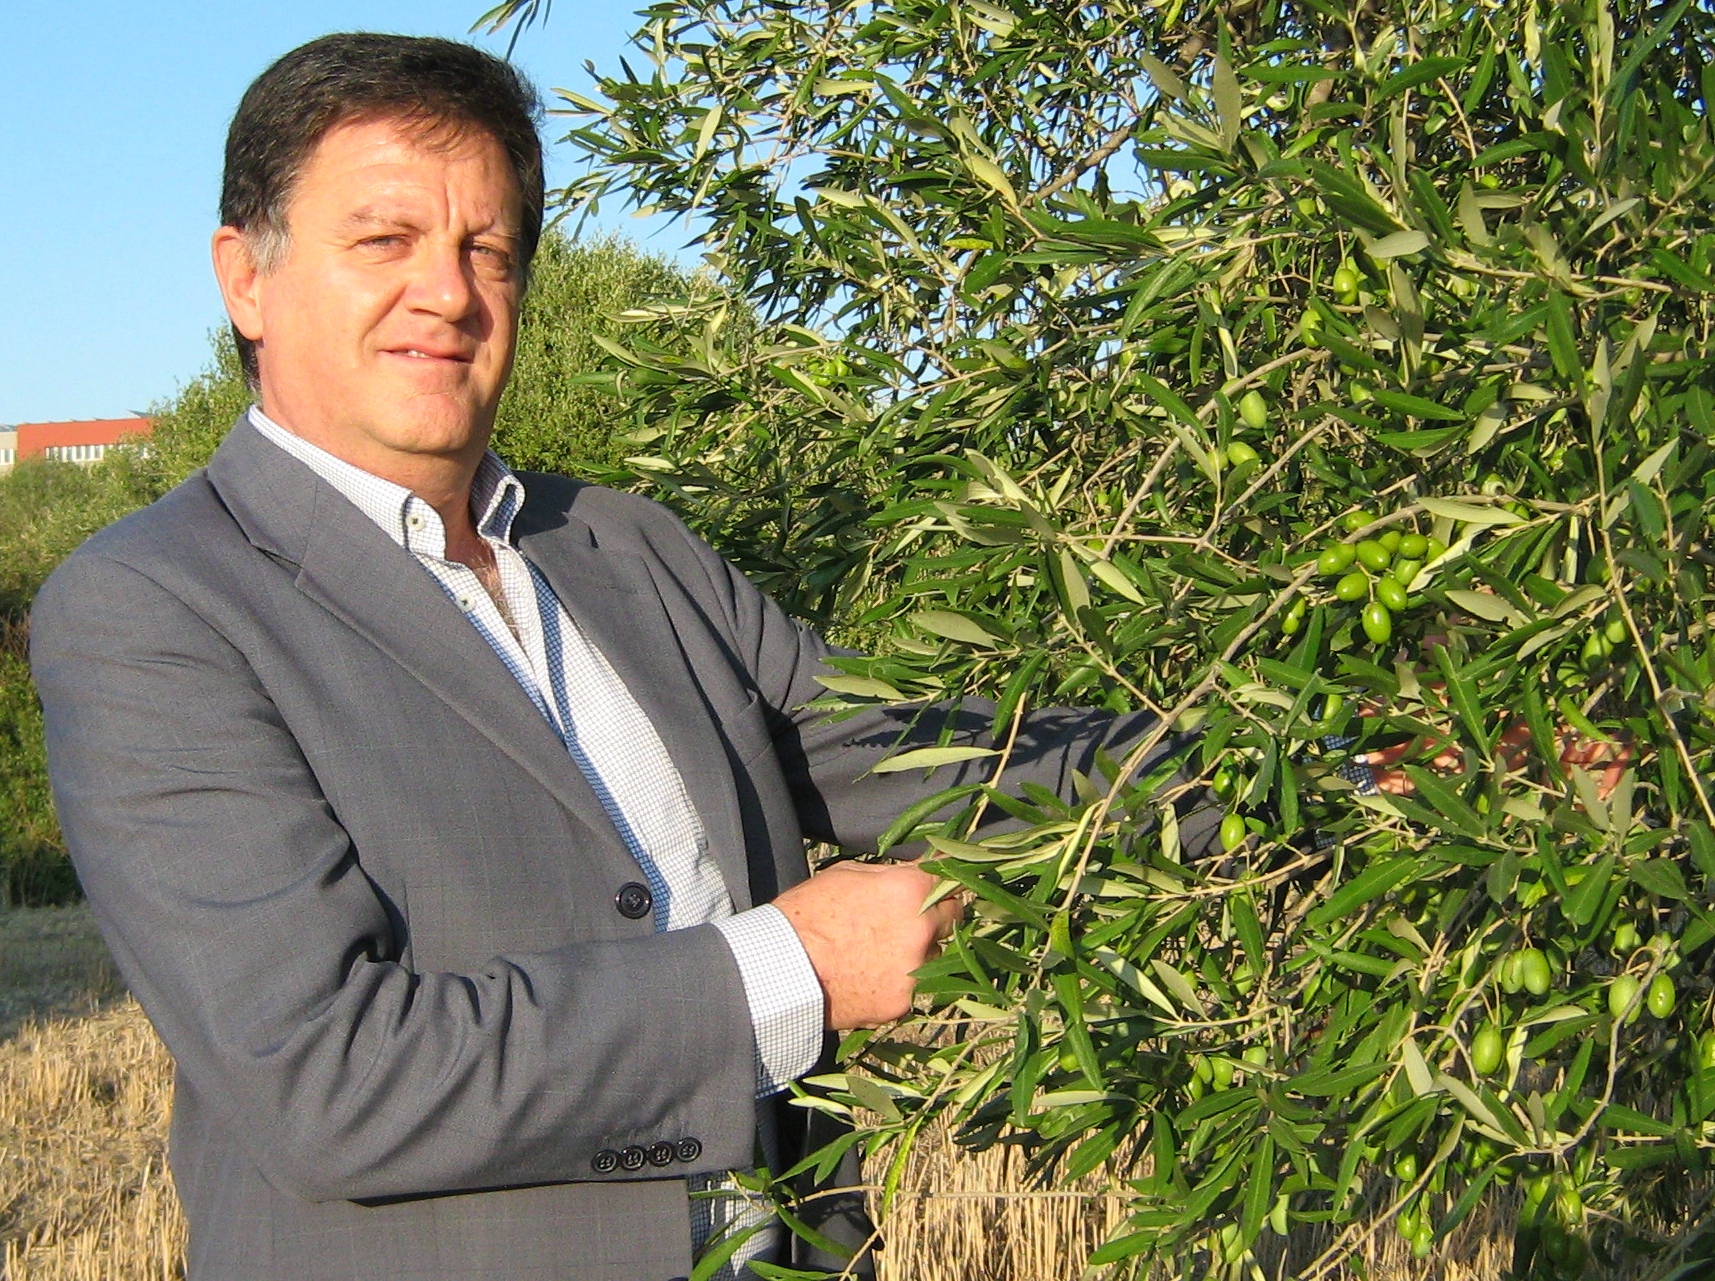 Meet Giovanni Marvulli, our organic extra virgin olive oil supplier.